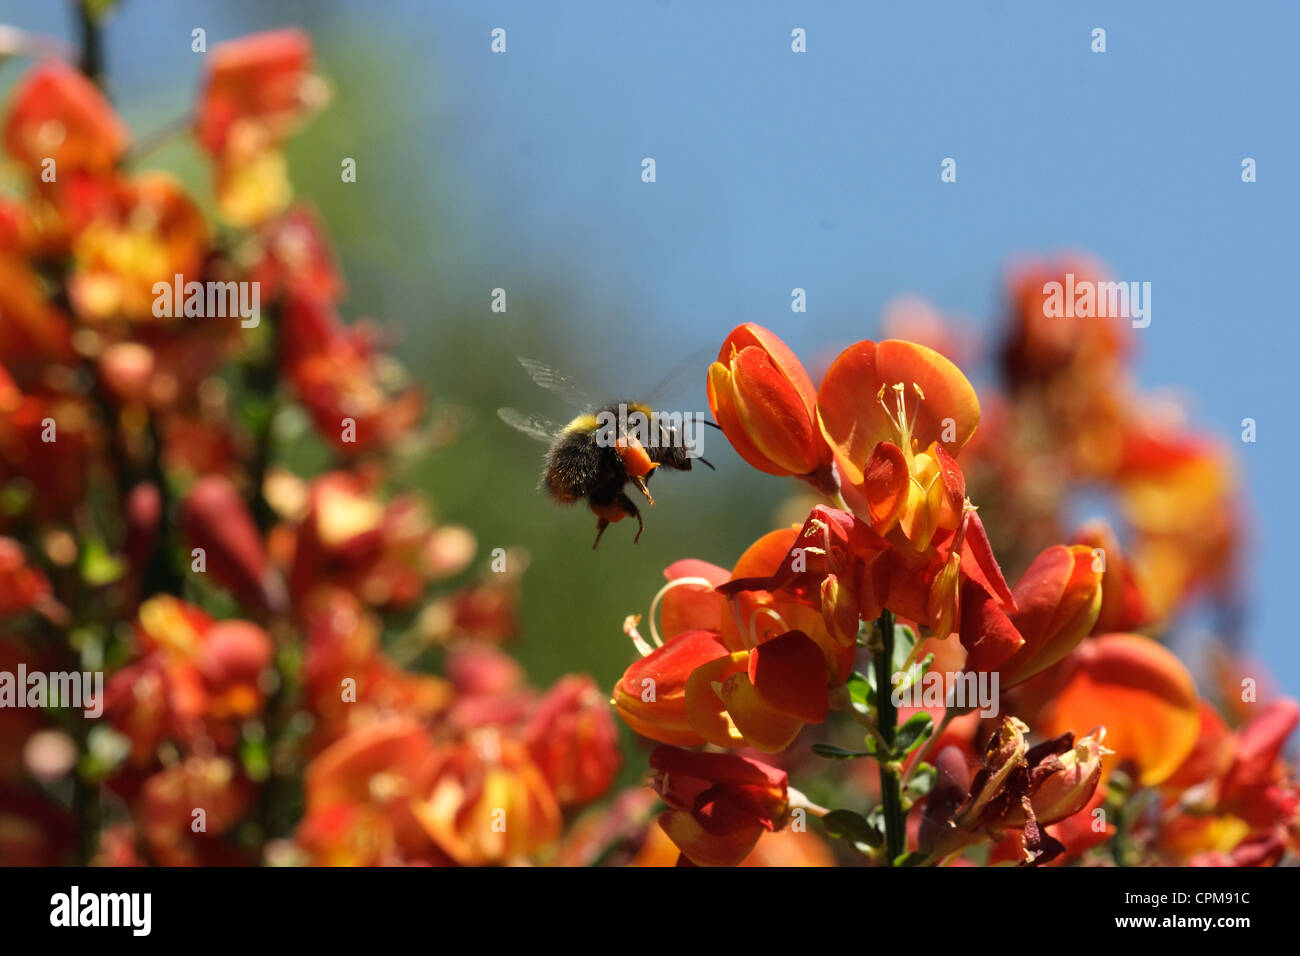 Bee in flight collecting Pollen Stock Photo